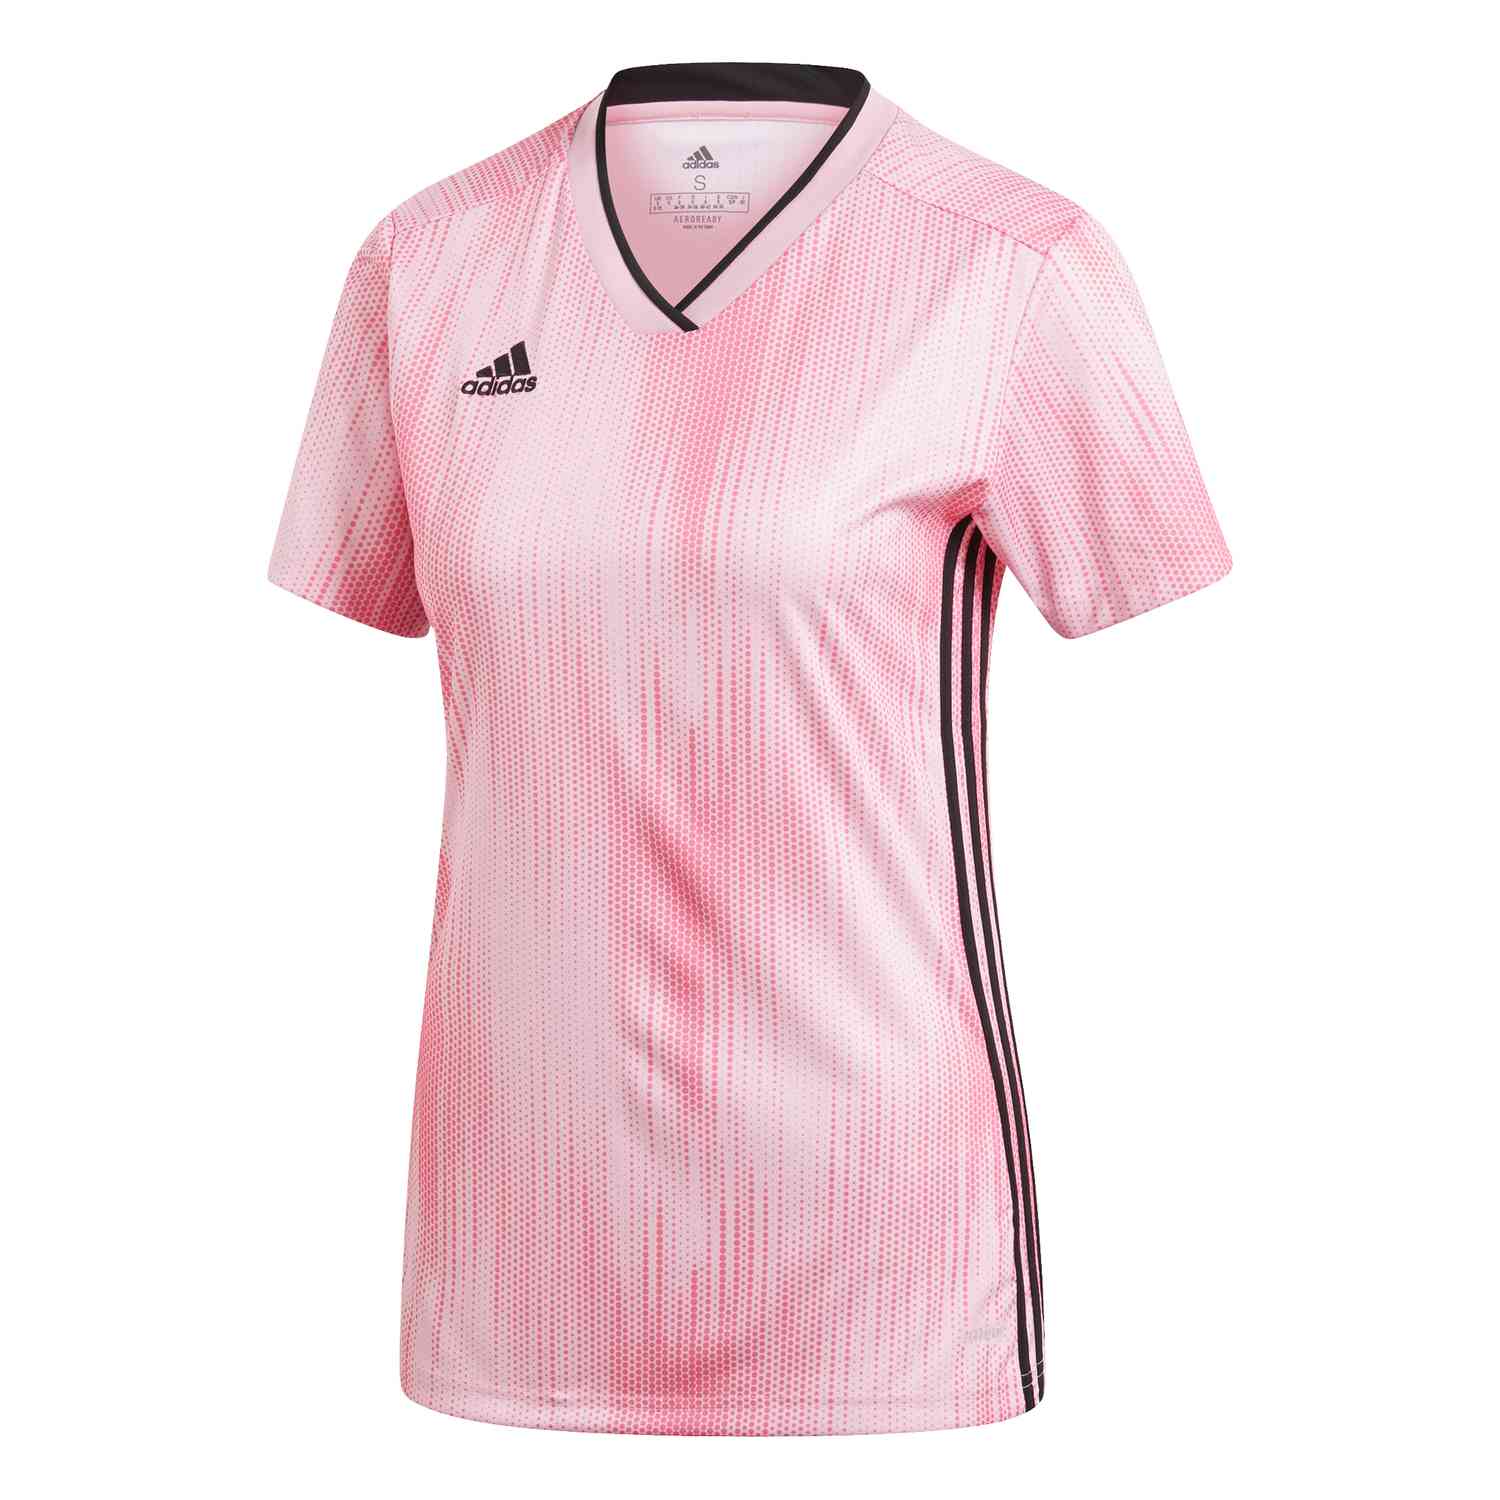 Womens adidas Tiro 19 Jersey - True Pink/Black - SoccerPro